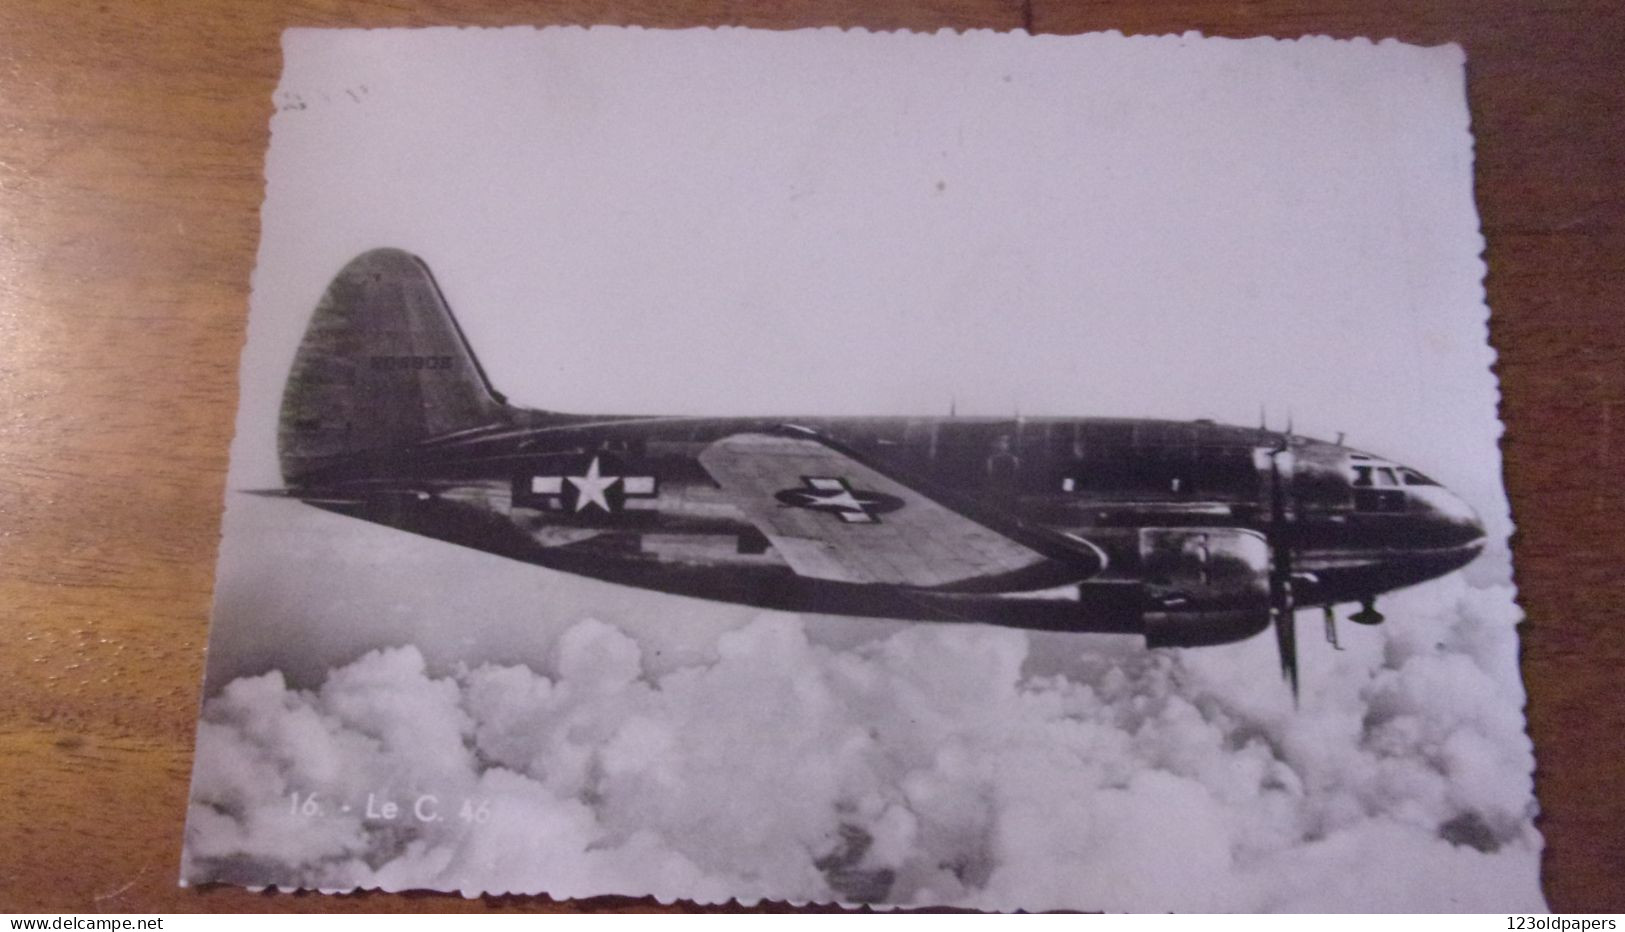 Aviation WWII AVION   CURTISS WRIGHT CW 20 COMMANDO  C 46 - 1939-1945: 2nd War